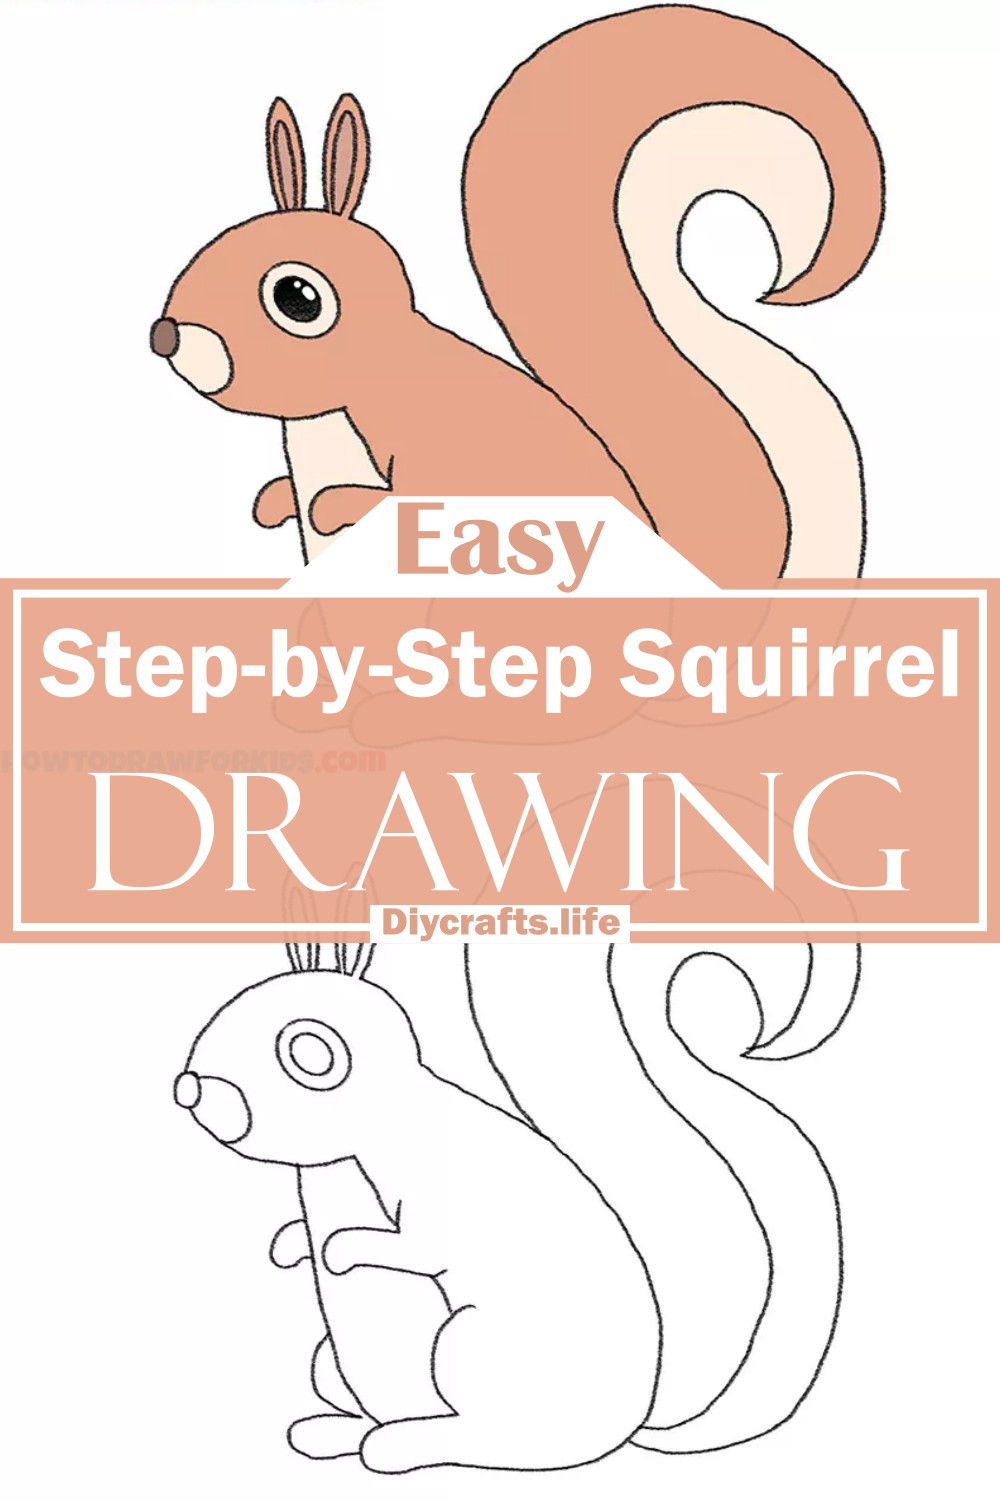 Step-by-Step Squirrel Drawing Tutorial